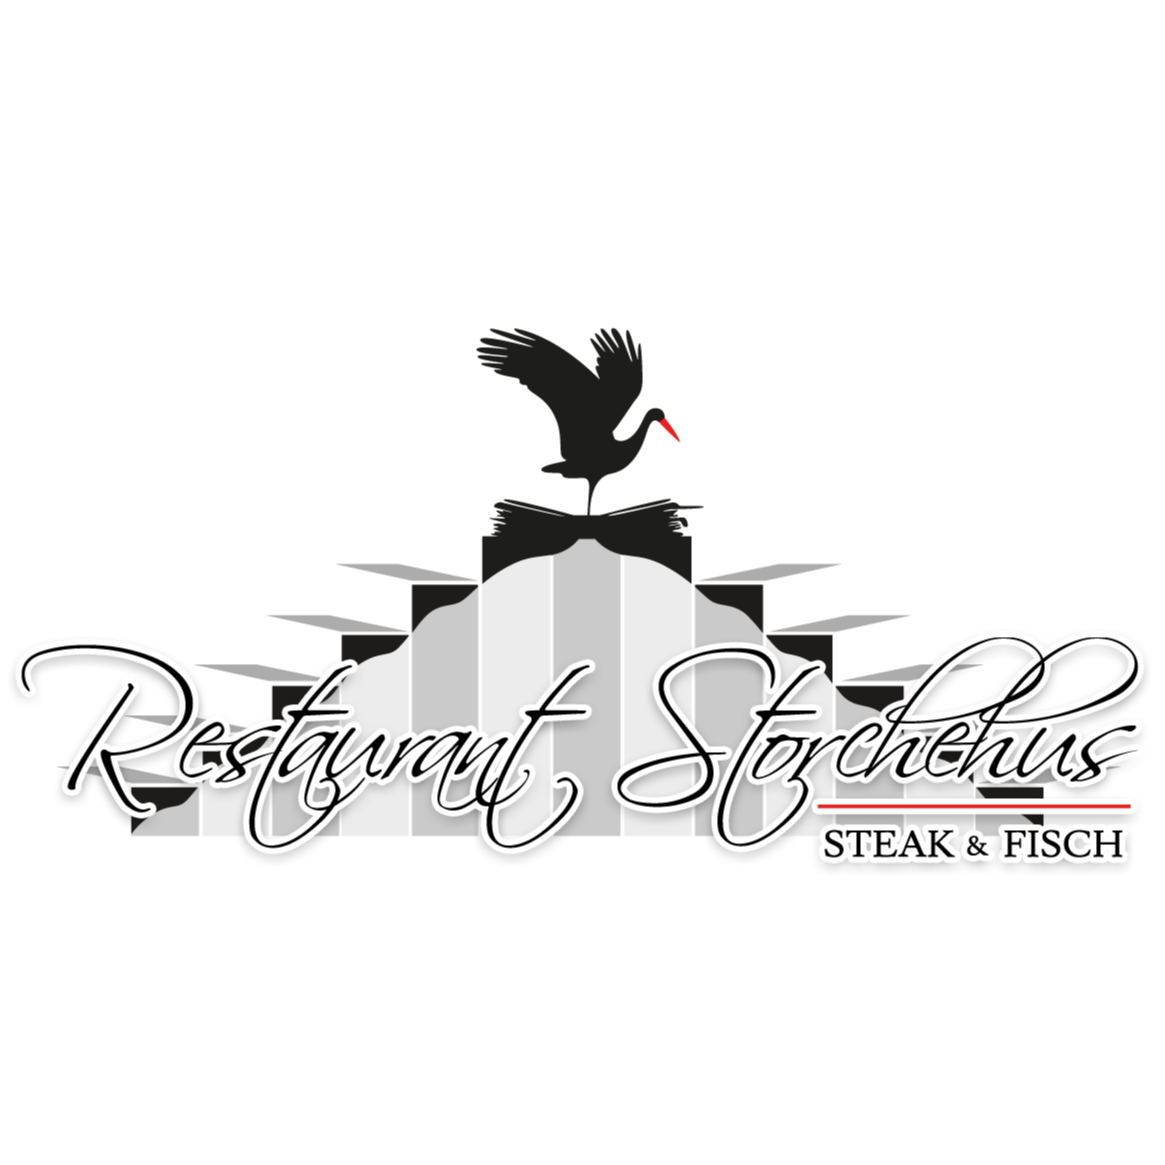 Restaurant Storchehus Logo